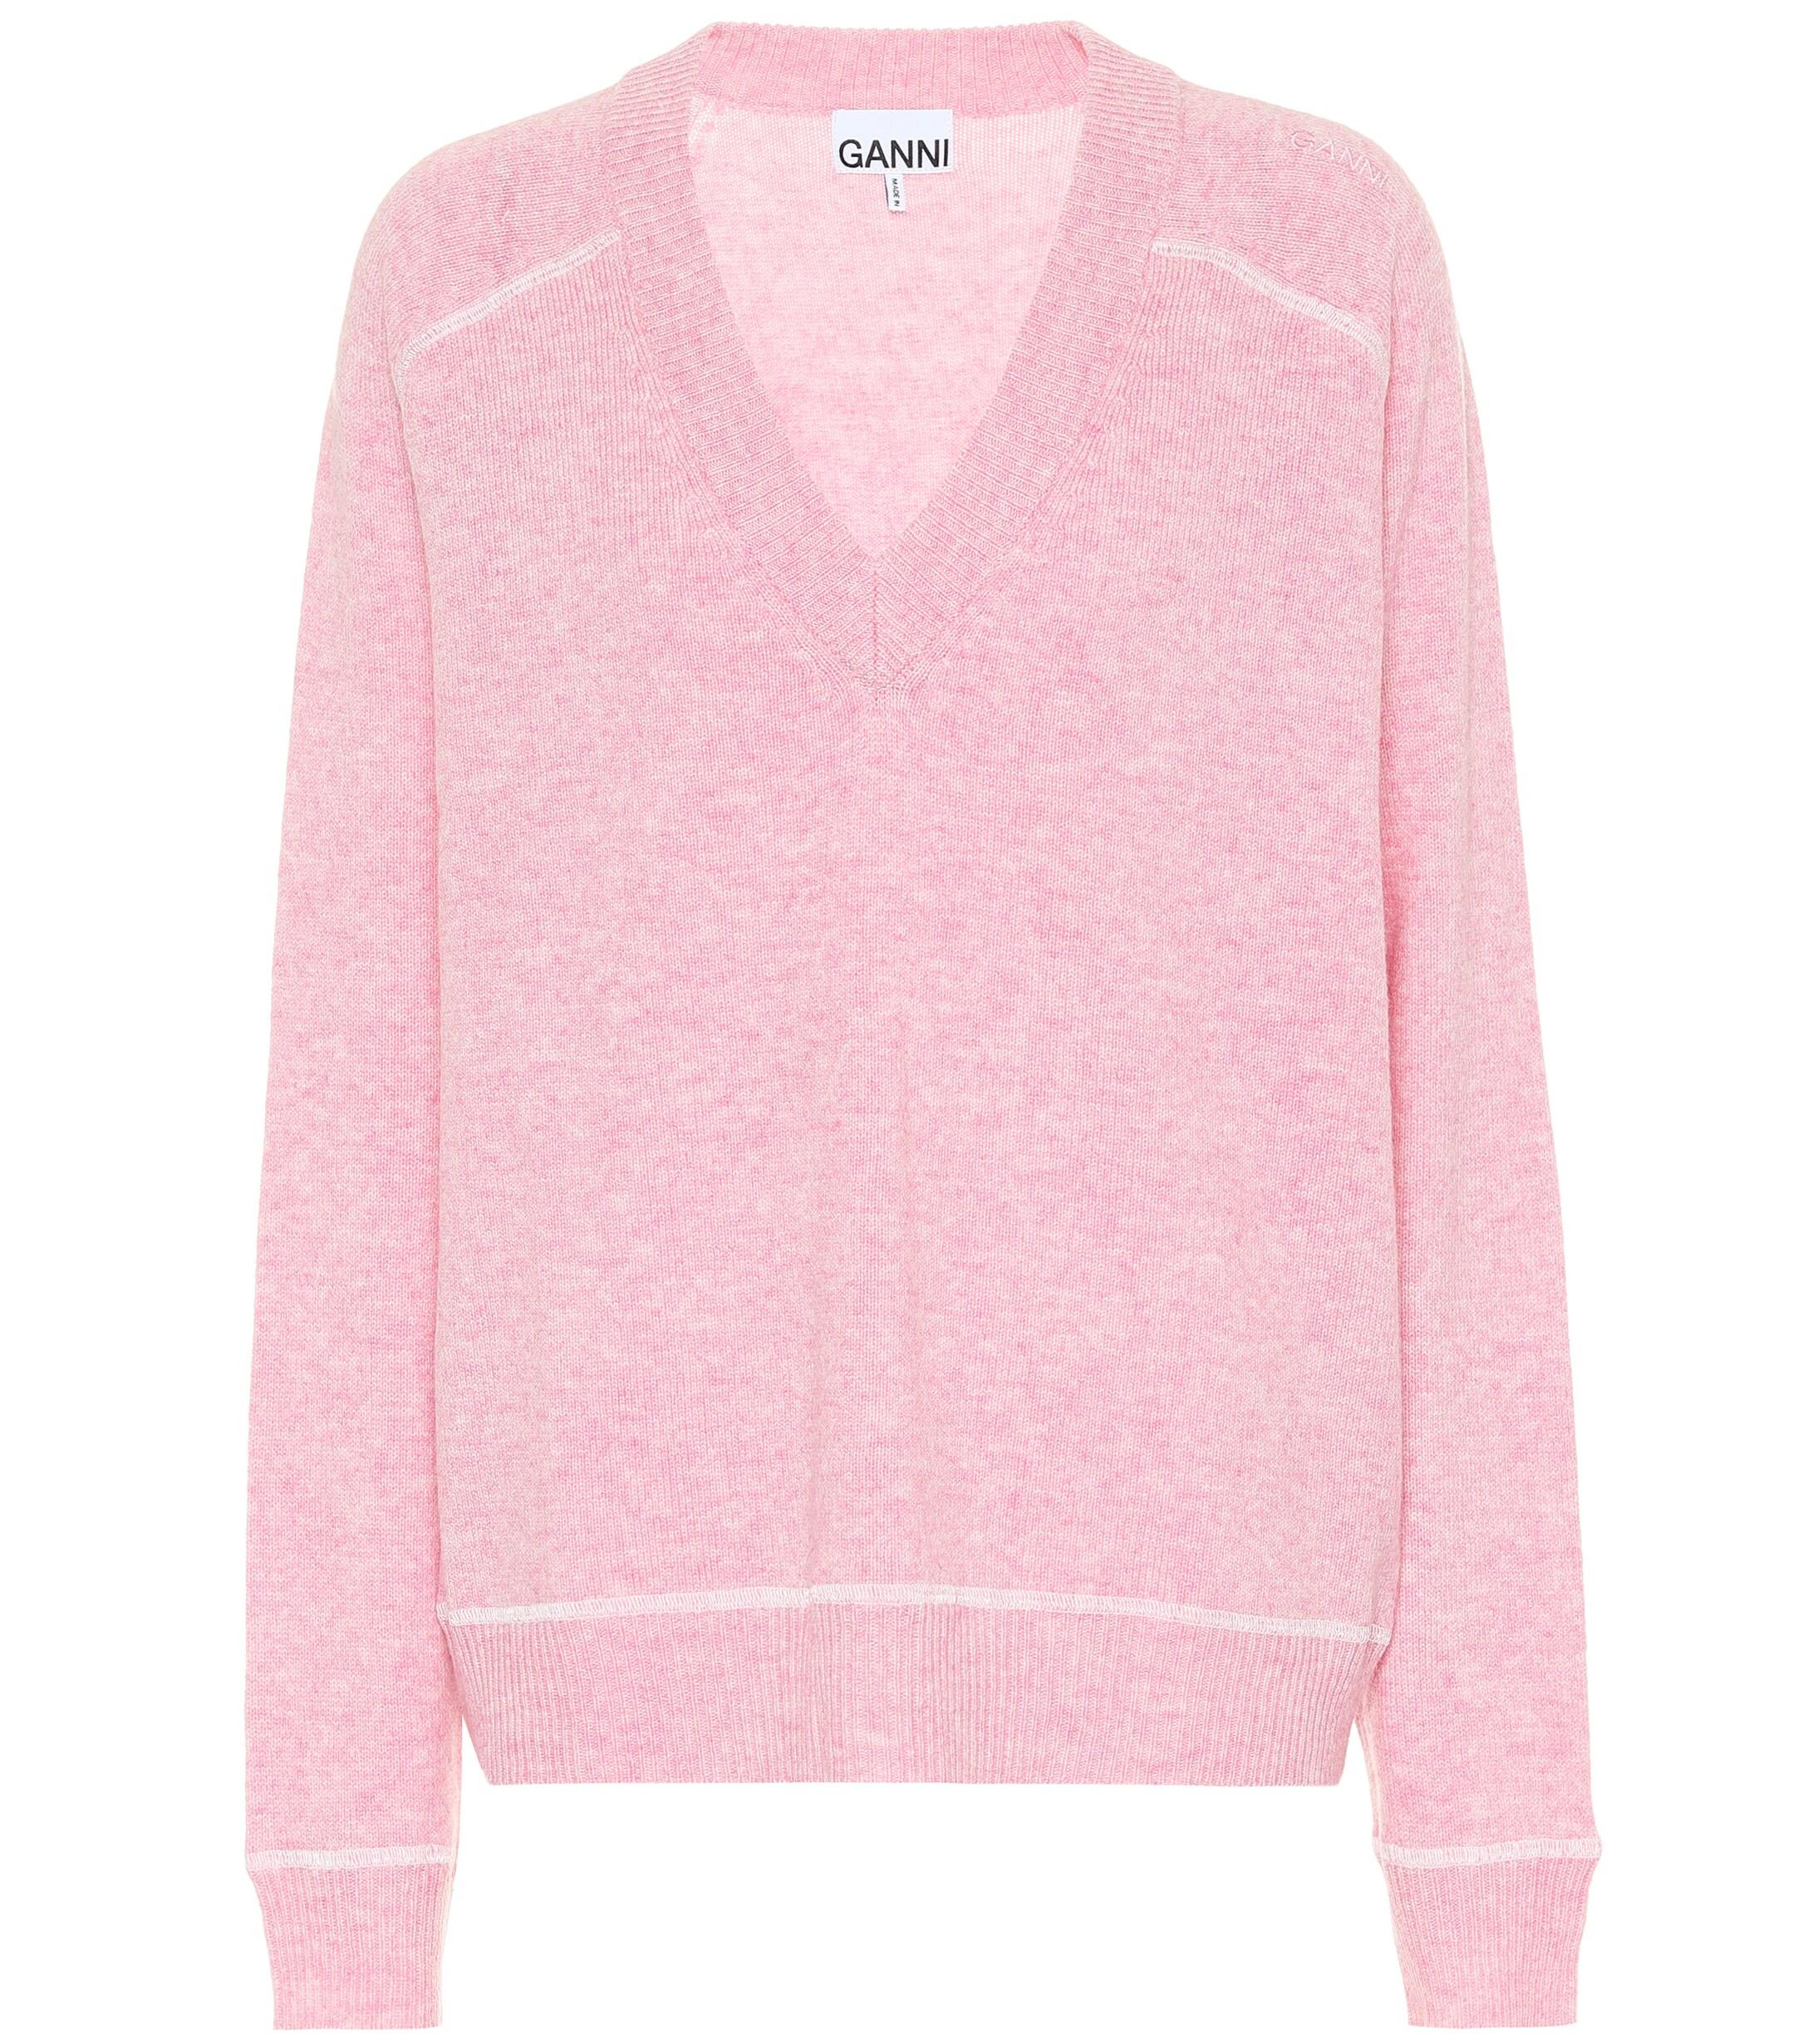 Ganni Wool-blend Sweater in Pink - Lyst